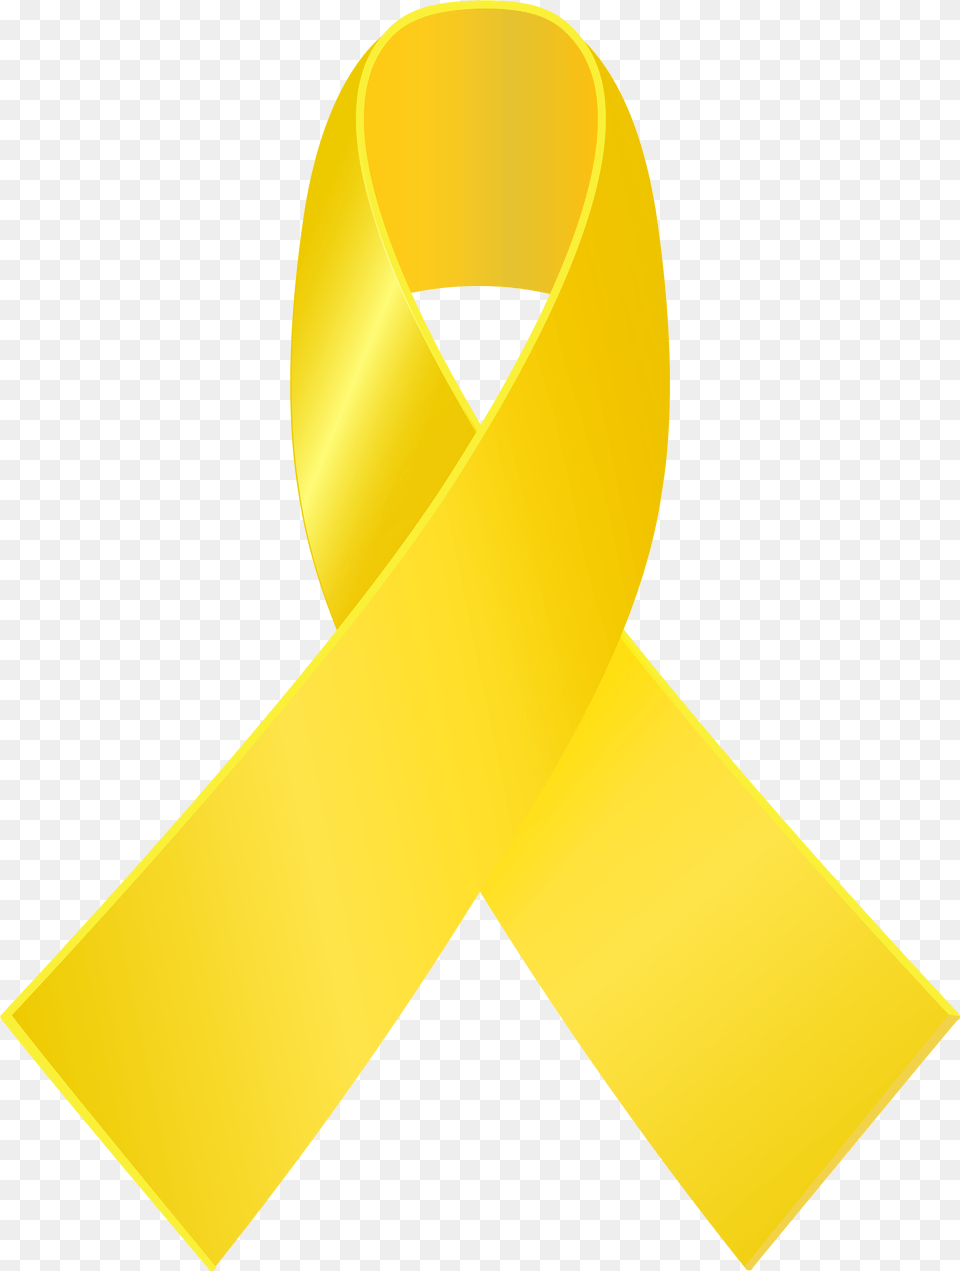 Yellow Awareness Ribbon Clip Art Yellow Awareness Ribbons, Accessories, Formal Wear, Gold, Tie Free Transparent Png